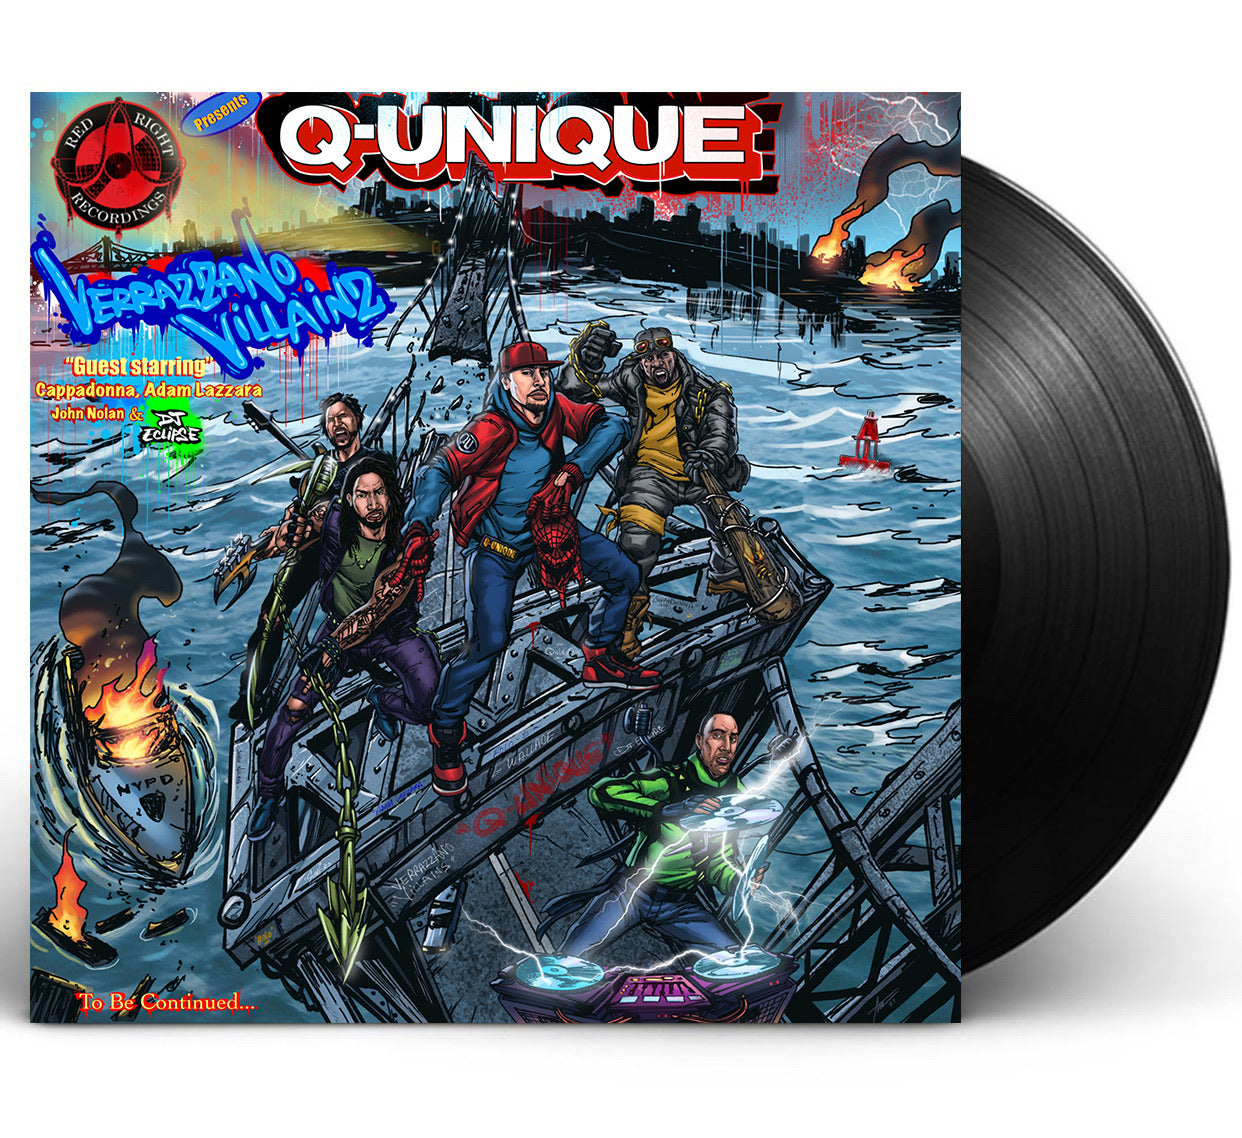 Q-Unique “Verrazzano Villains” 7” Vinyl